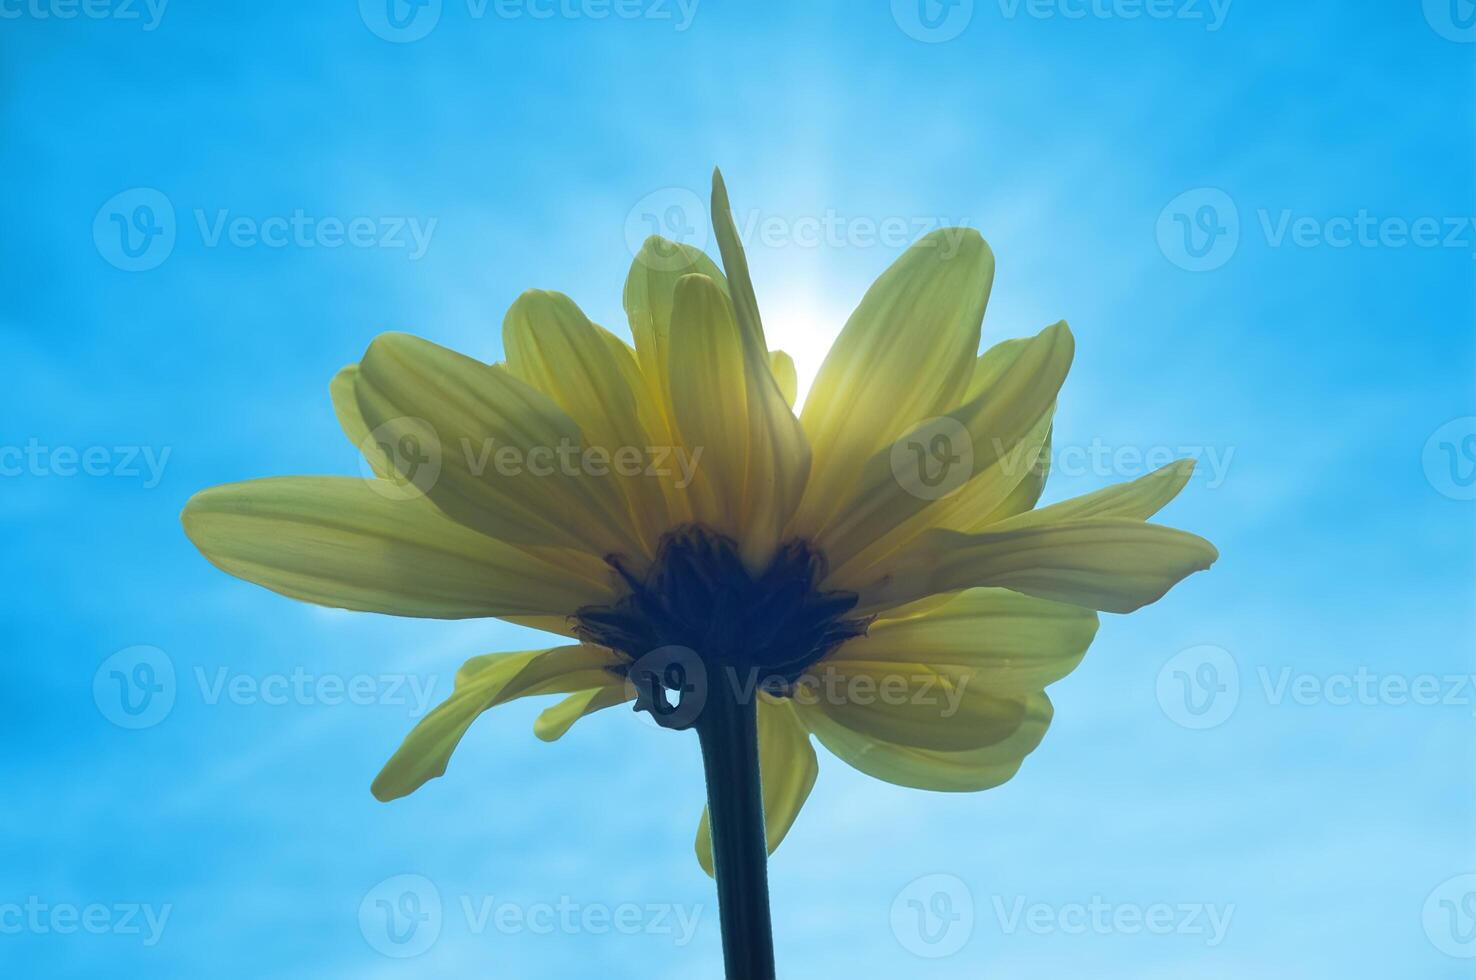 crisântemo lavandulifólio flores com amarelo pétalas foto